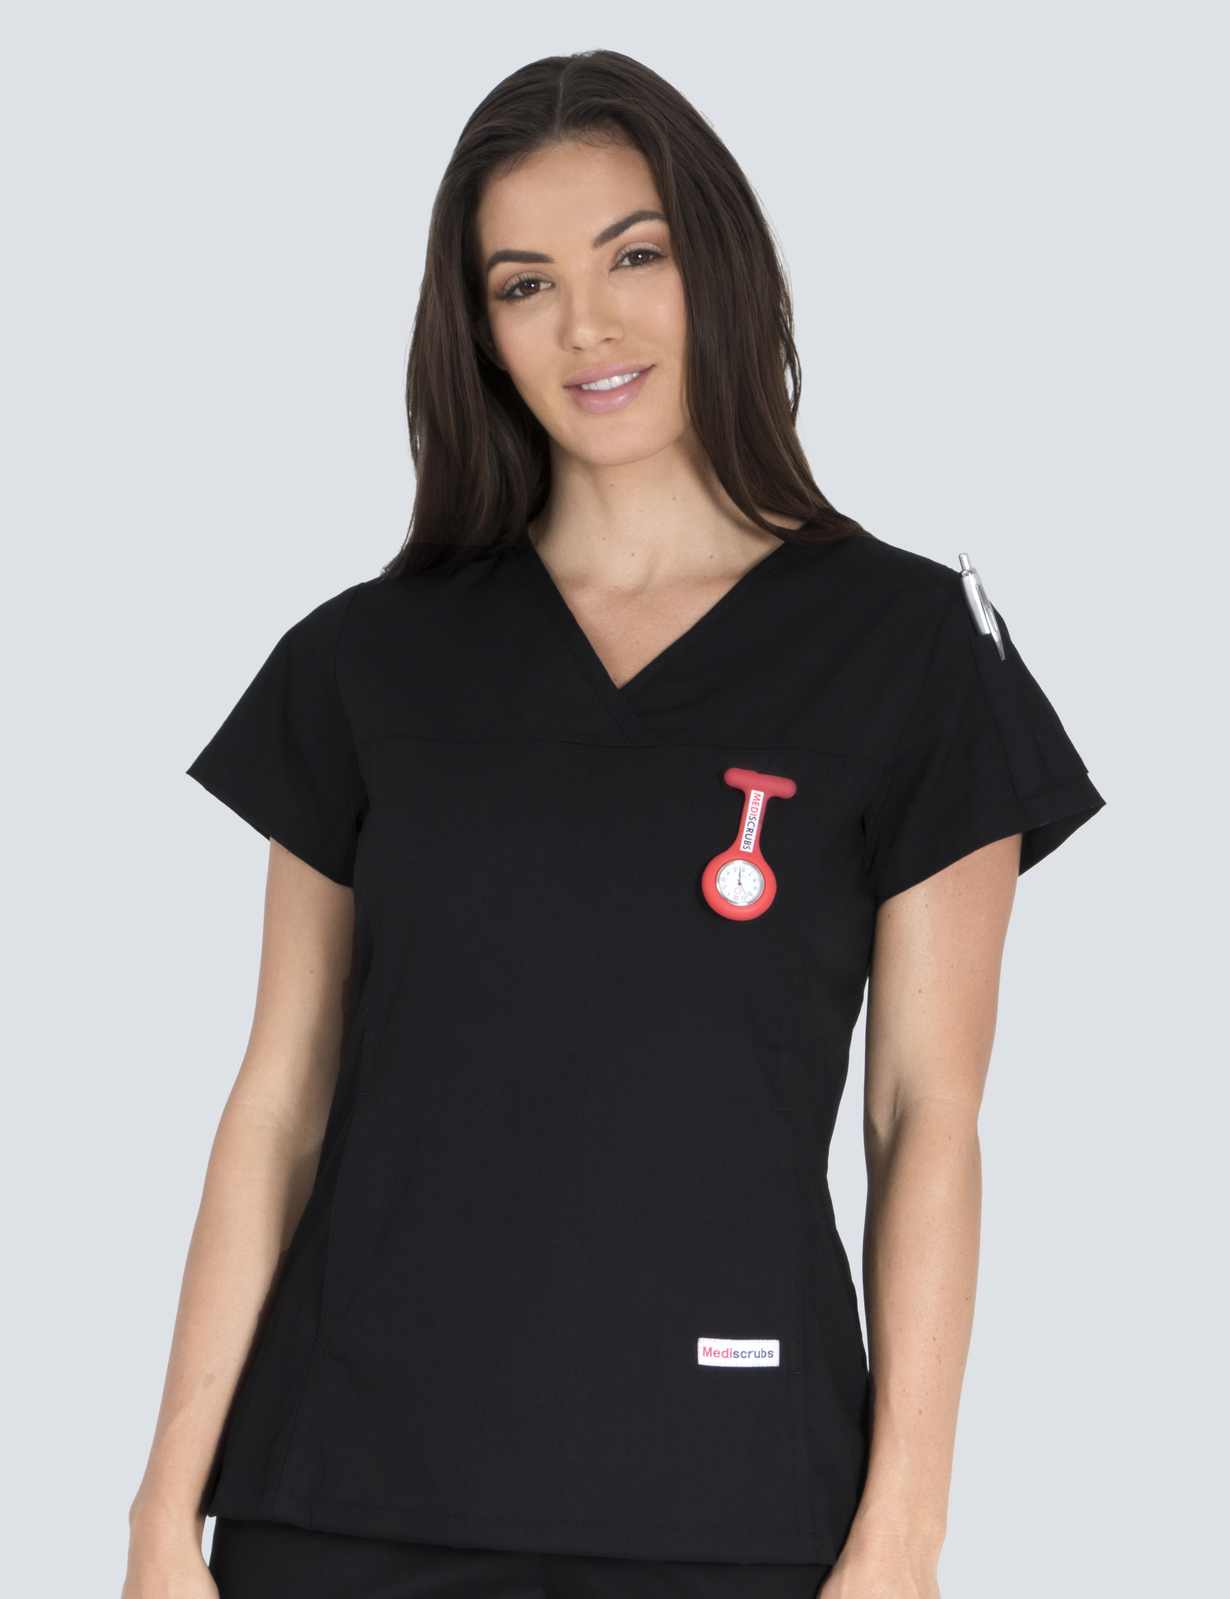 St Vincent's Hospital Radiographer Uniform Top Only Bundle (Women's Fit Solid  Top in Black + Logo)